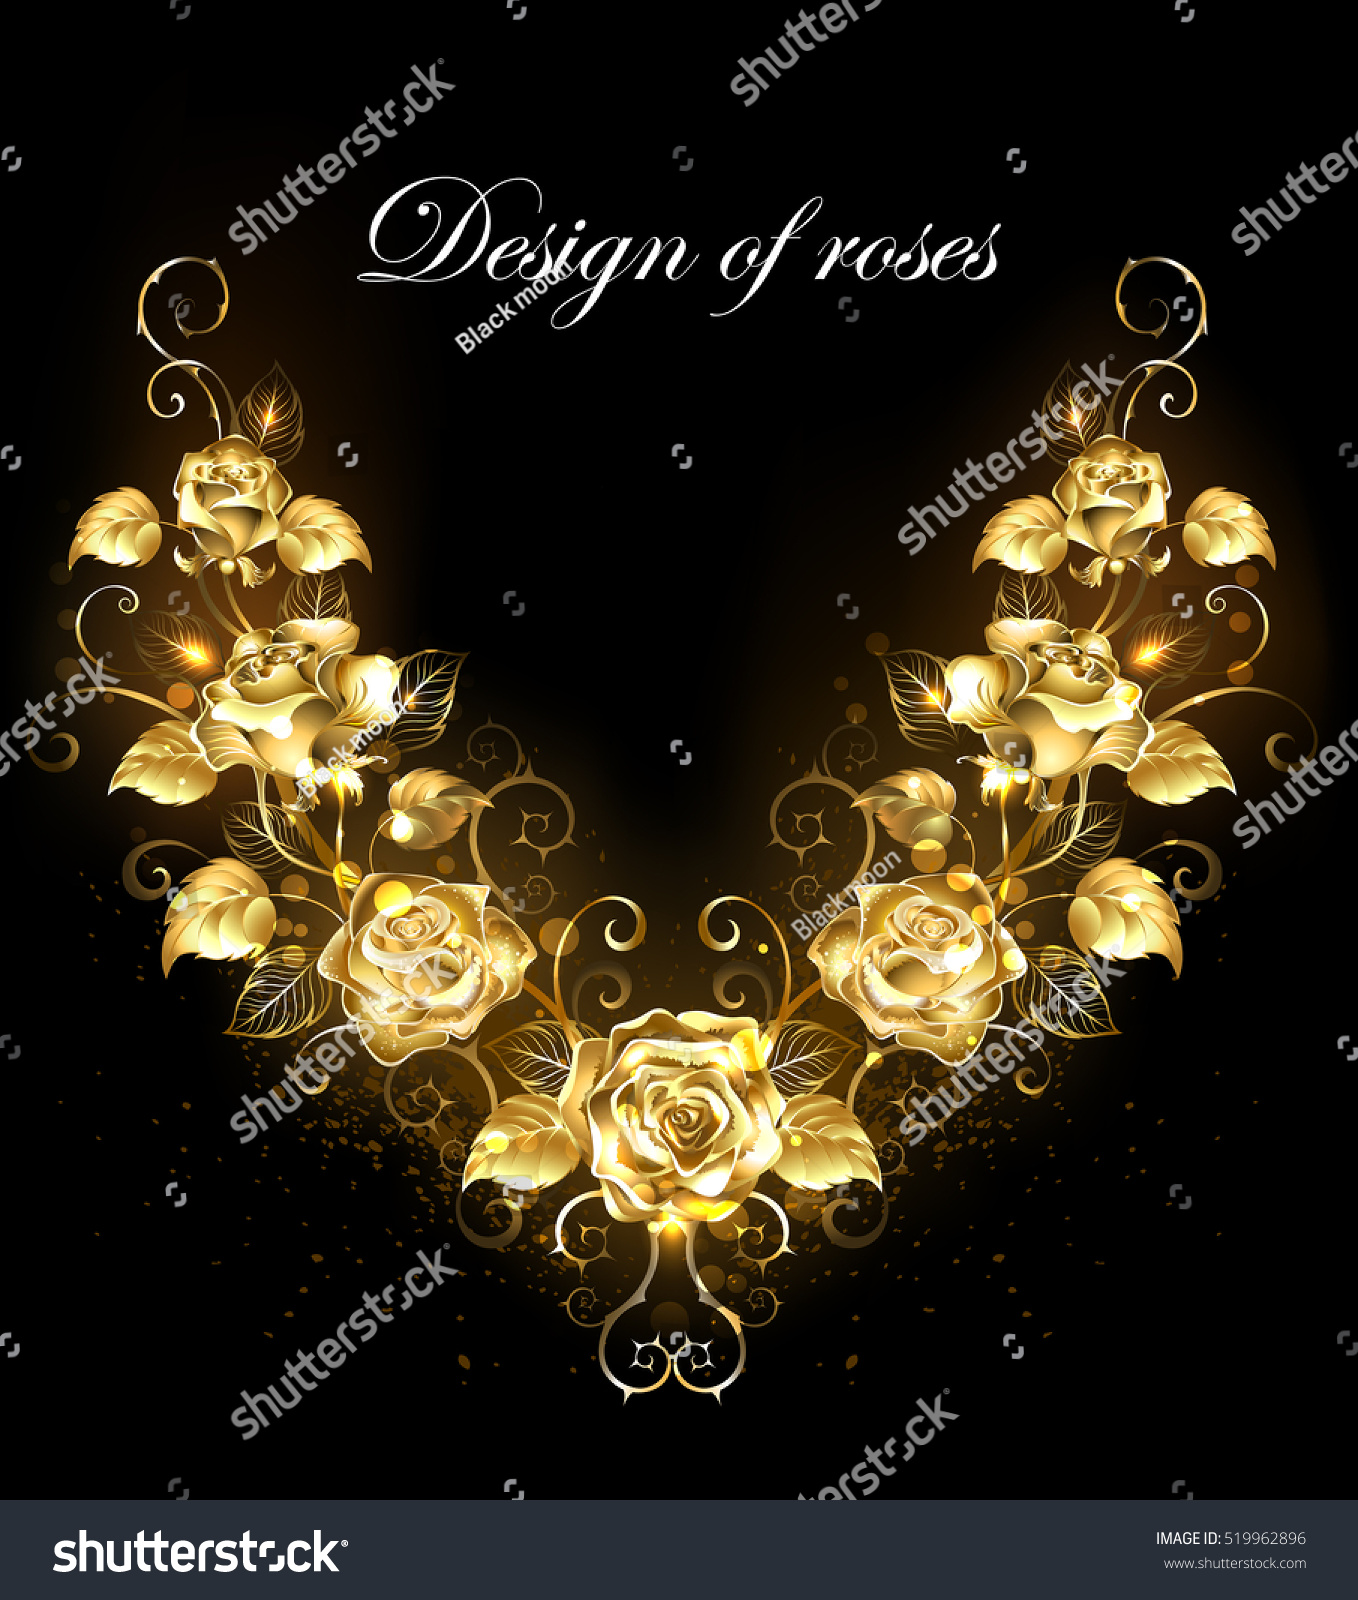 SVG of Symmetrical pattern of shiny, gold, twisted roses on black background. svg